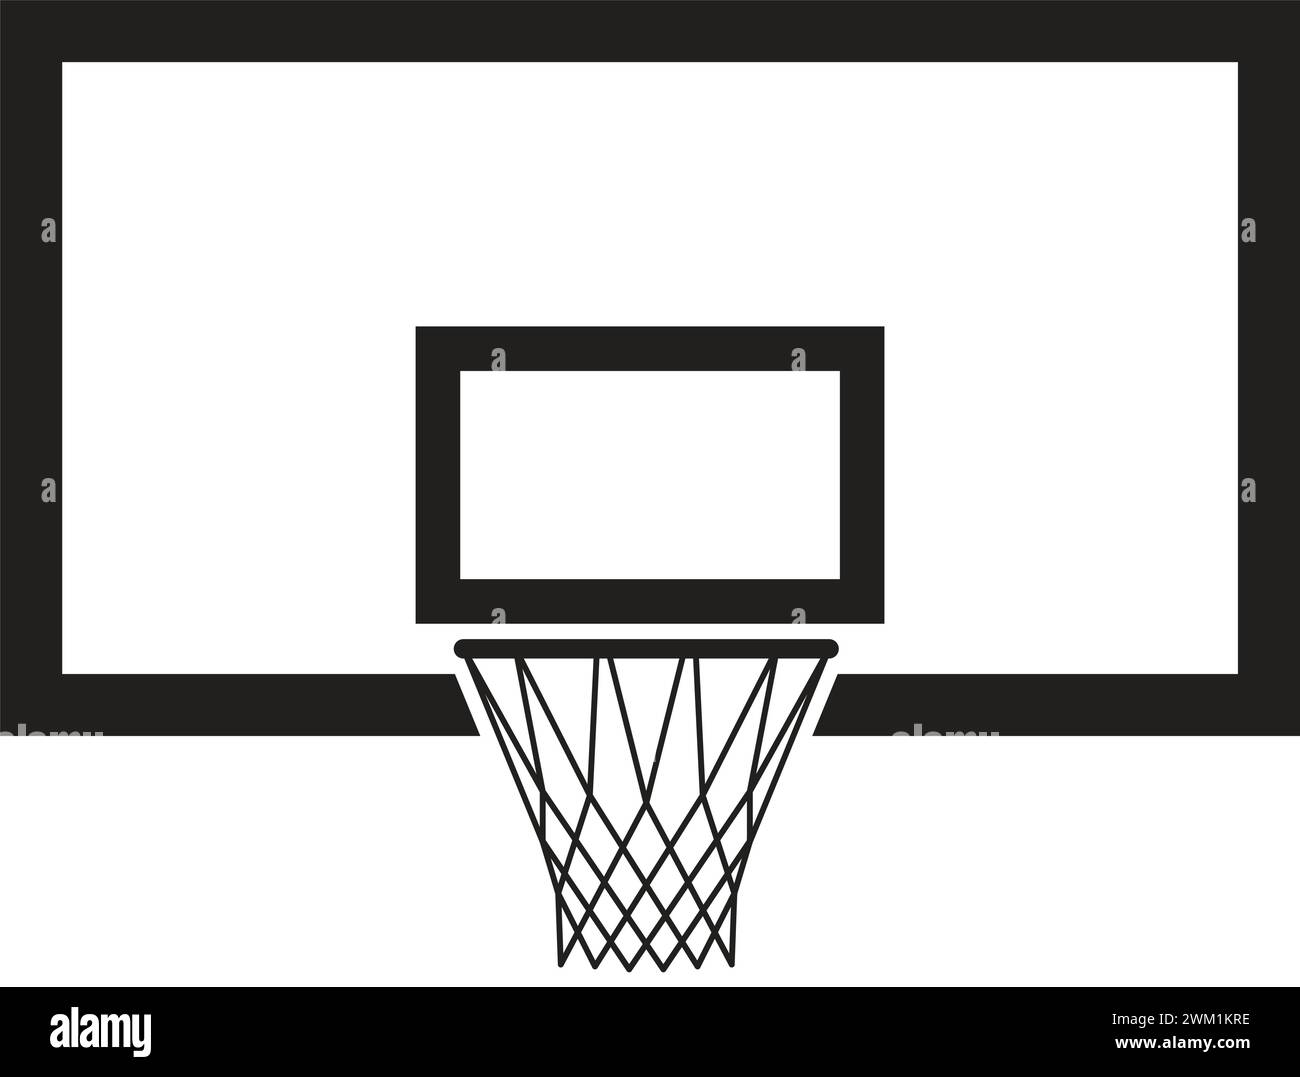 vector basketball backboard and hoop isolated on white background. basketball game Stock Vector